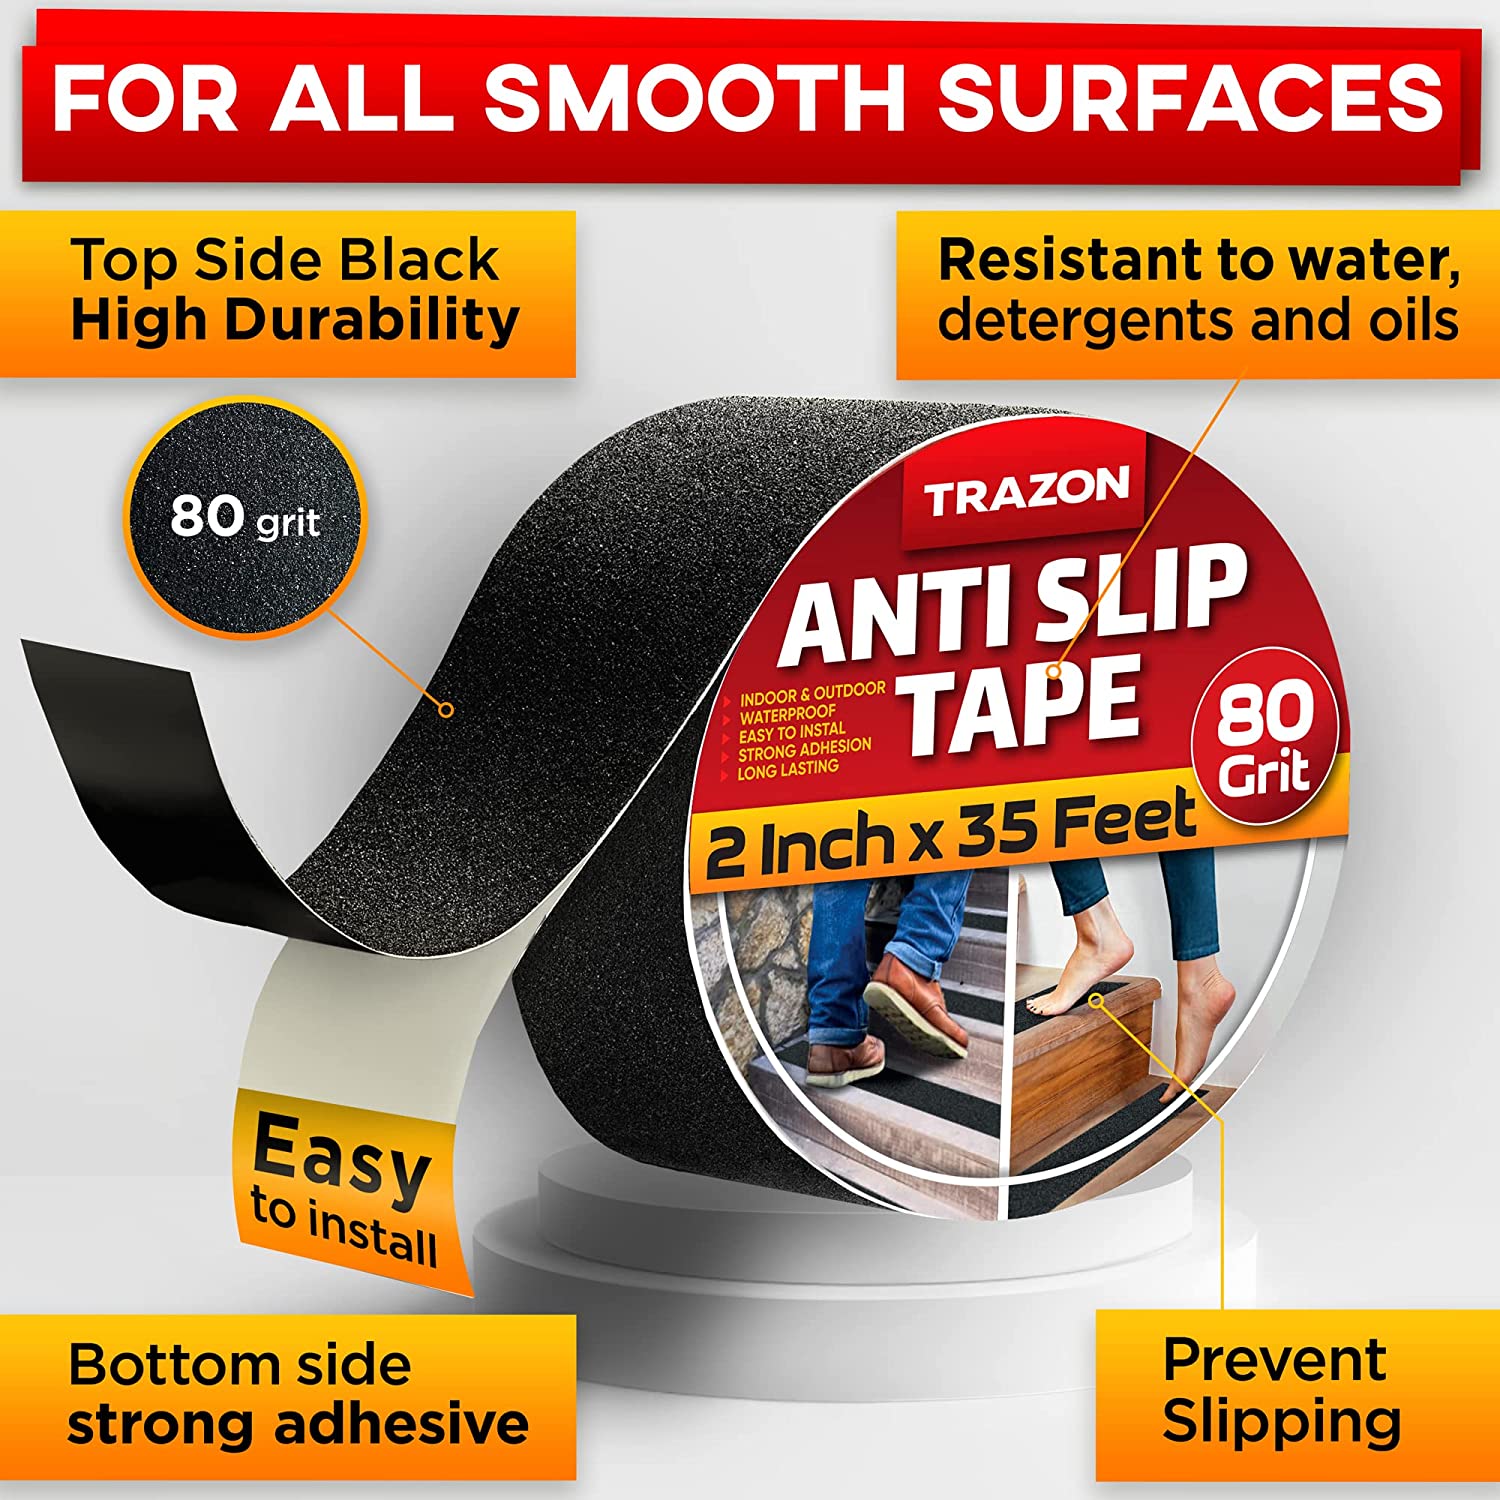 TapePlus - Anti Slip Tape for Stairs (Black 4 x 40 Feet Wide Tread)  Waterproof Grip Tape